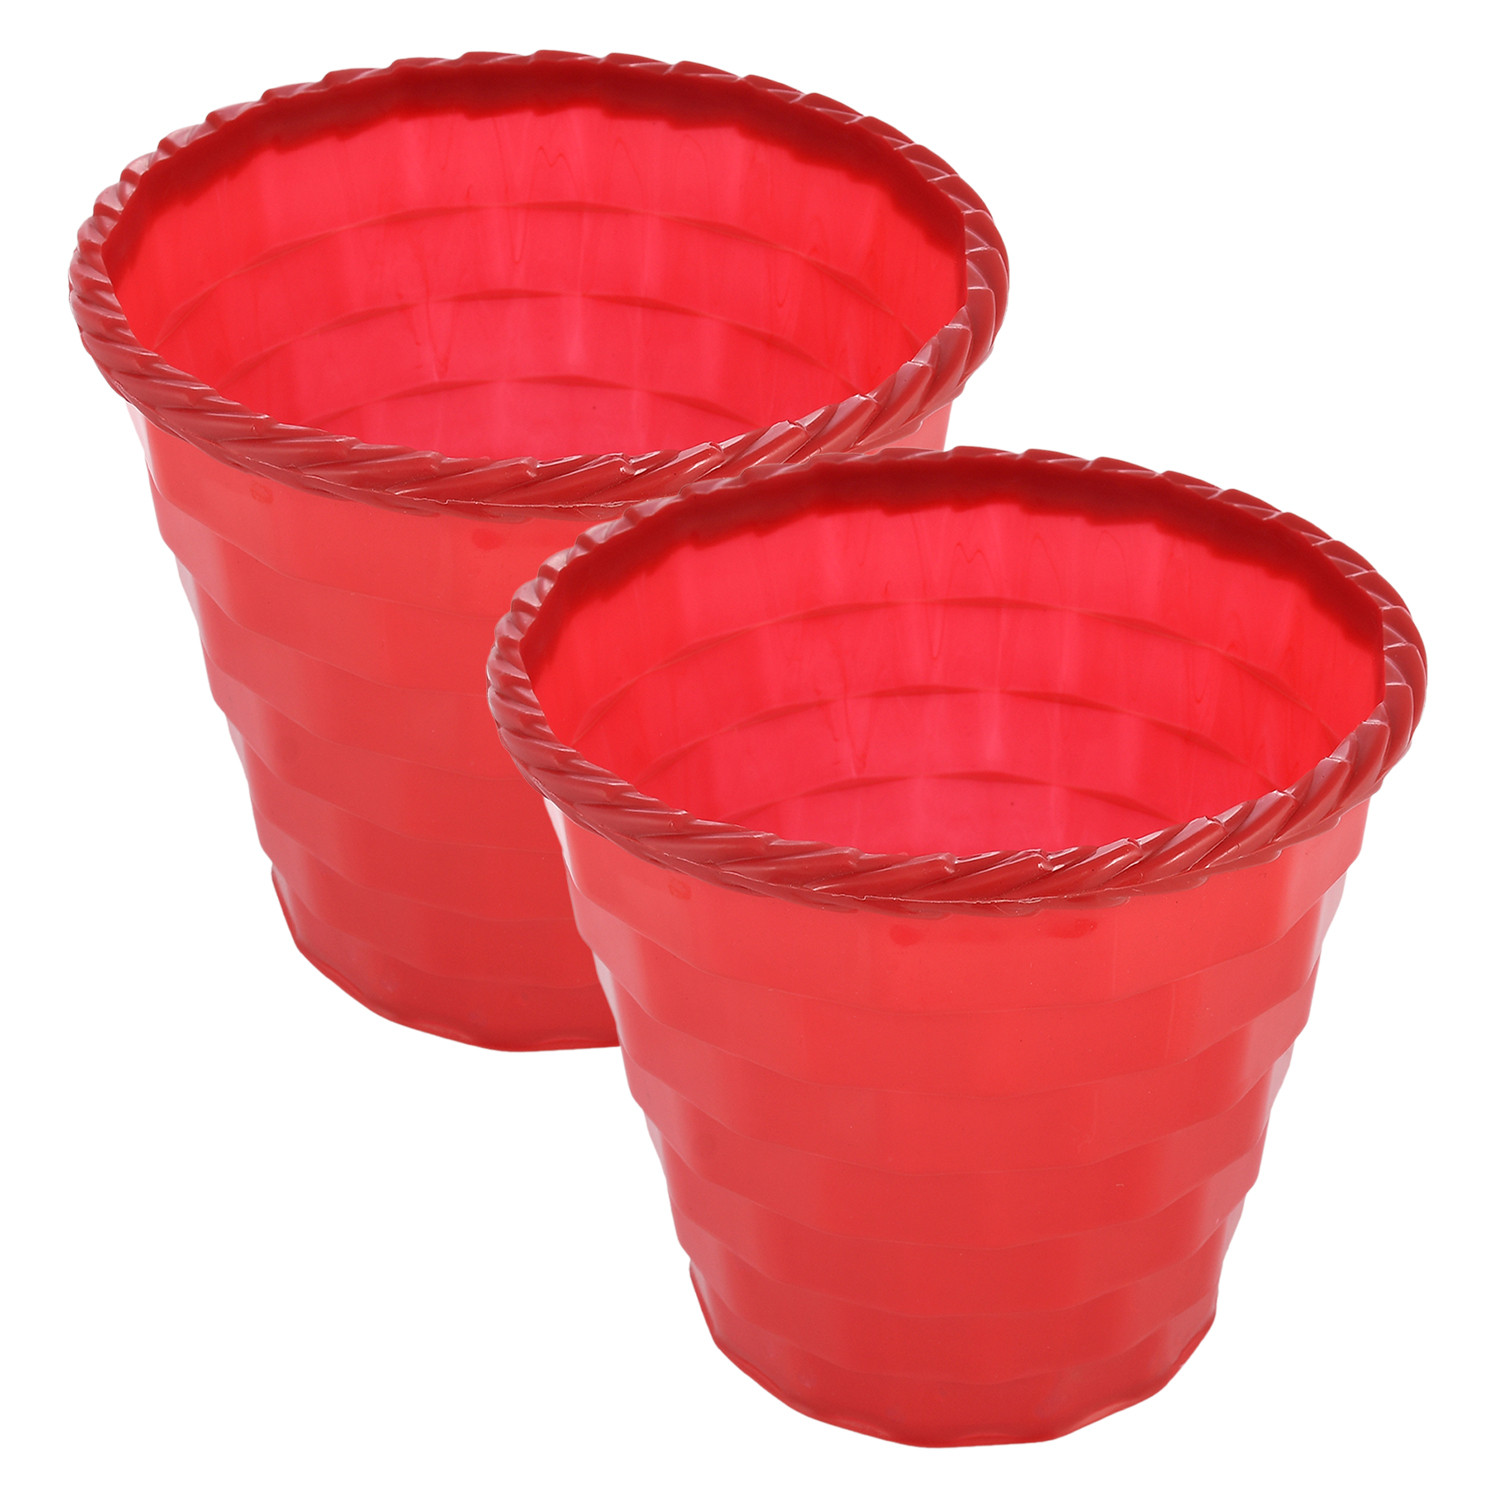 Kuber Industries Brick Flower Pot|Durable Plastic Flower Pots|Planters for Home Décor|Garden|Living Room|Balcony|8 Inch (Red)